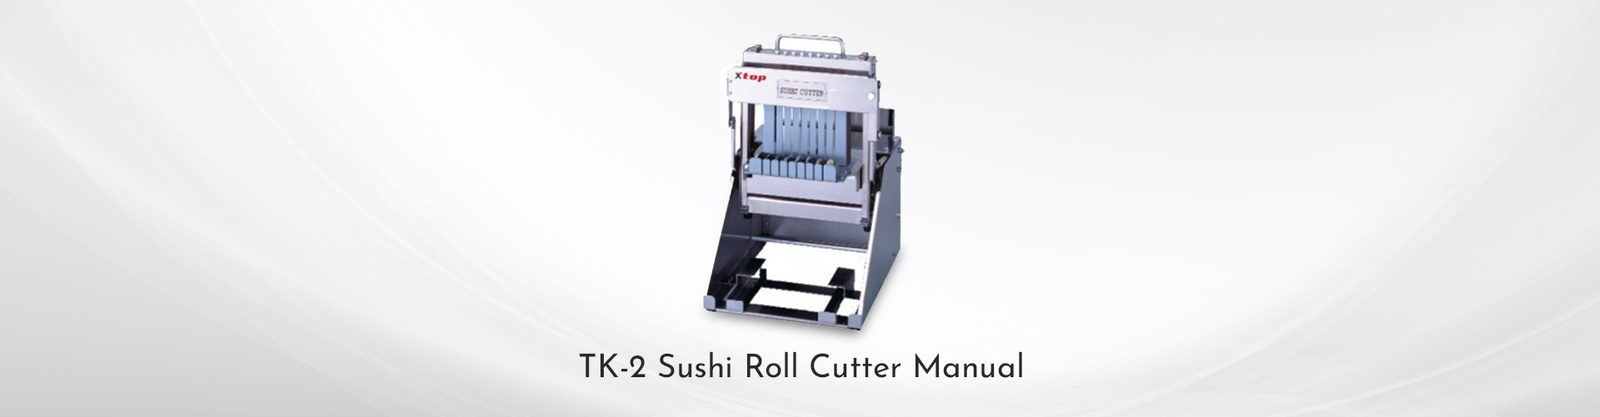  TK-2 Sushi Roll Cutter Manual